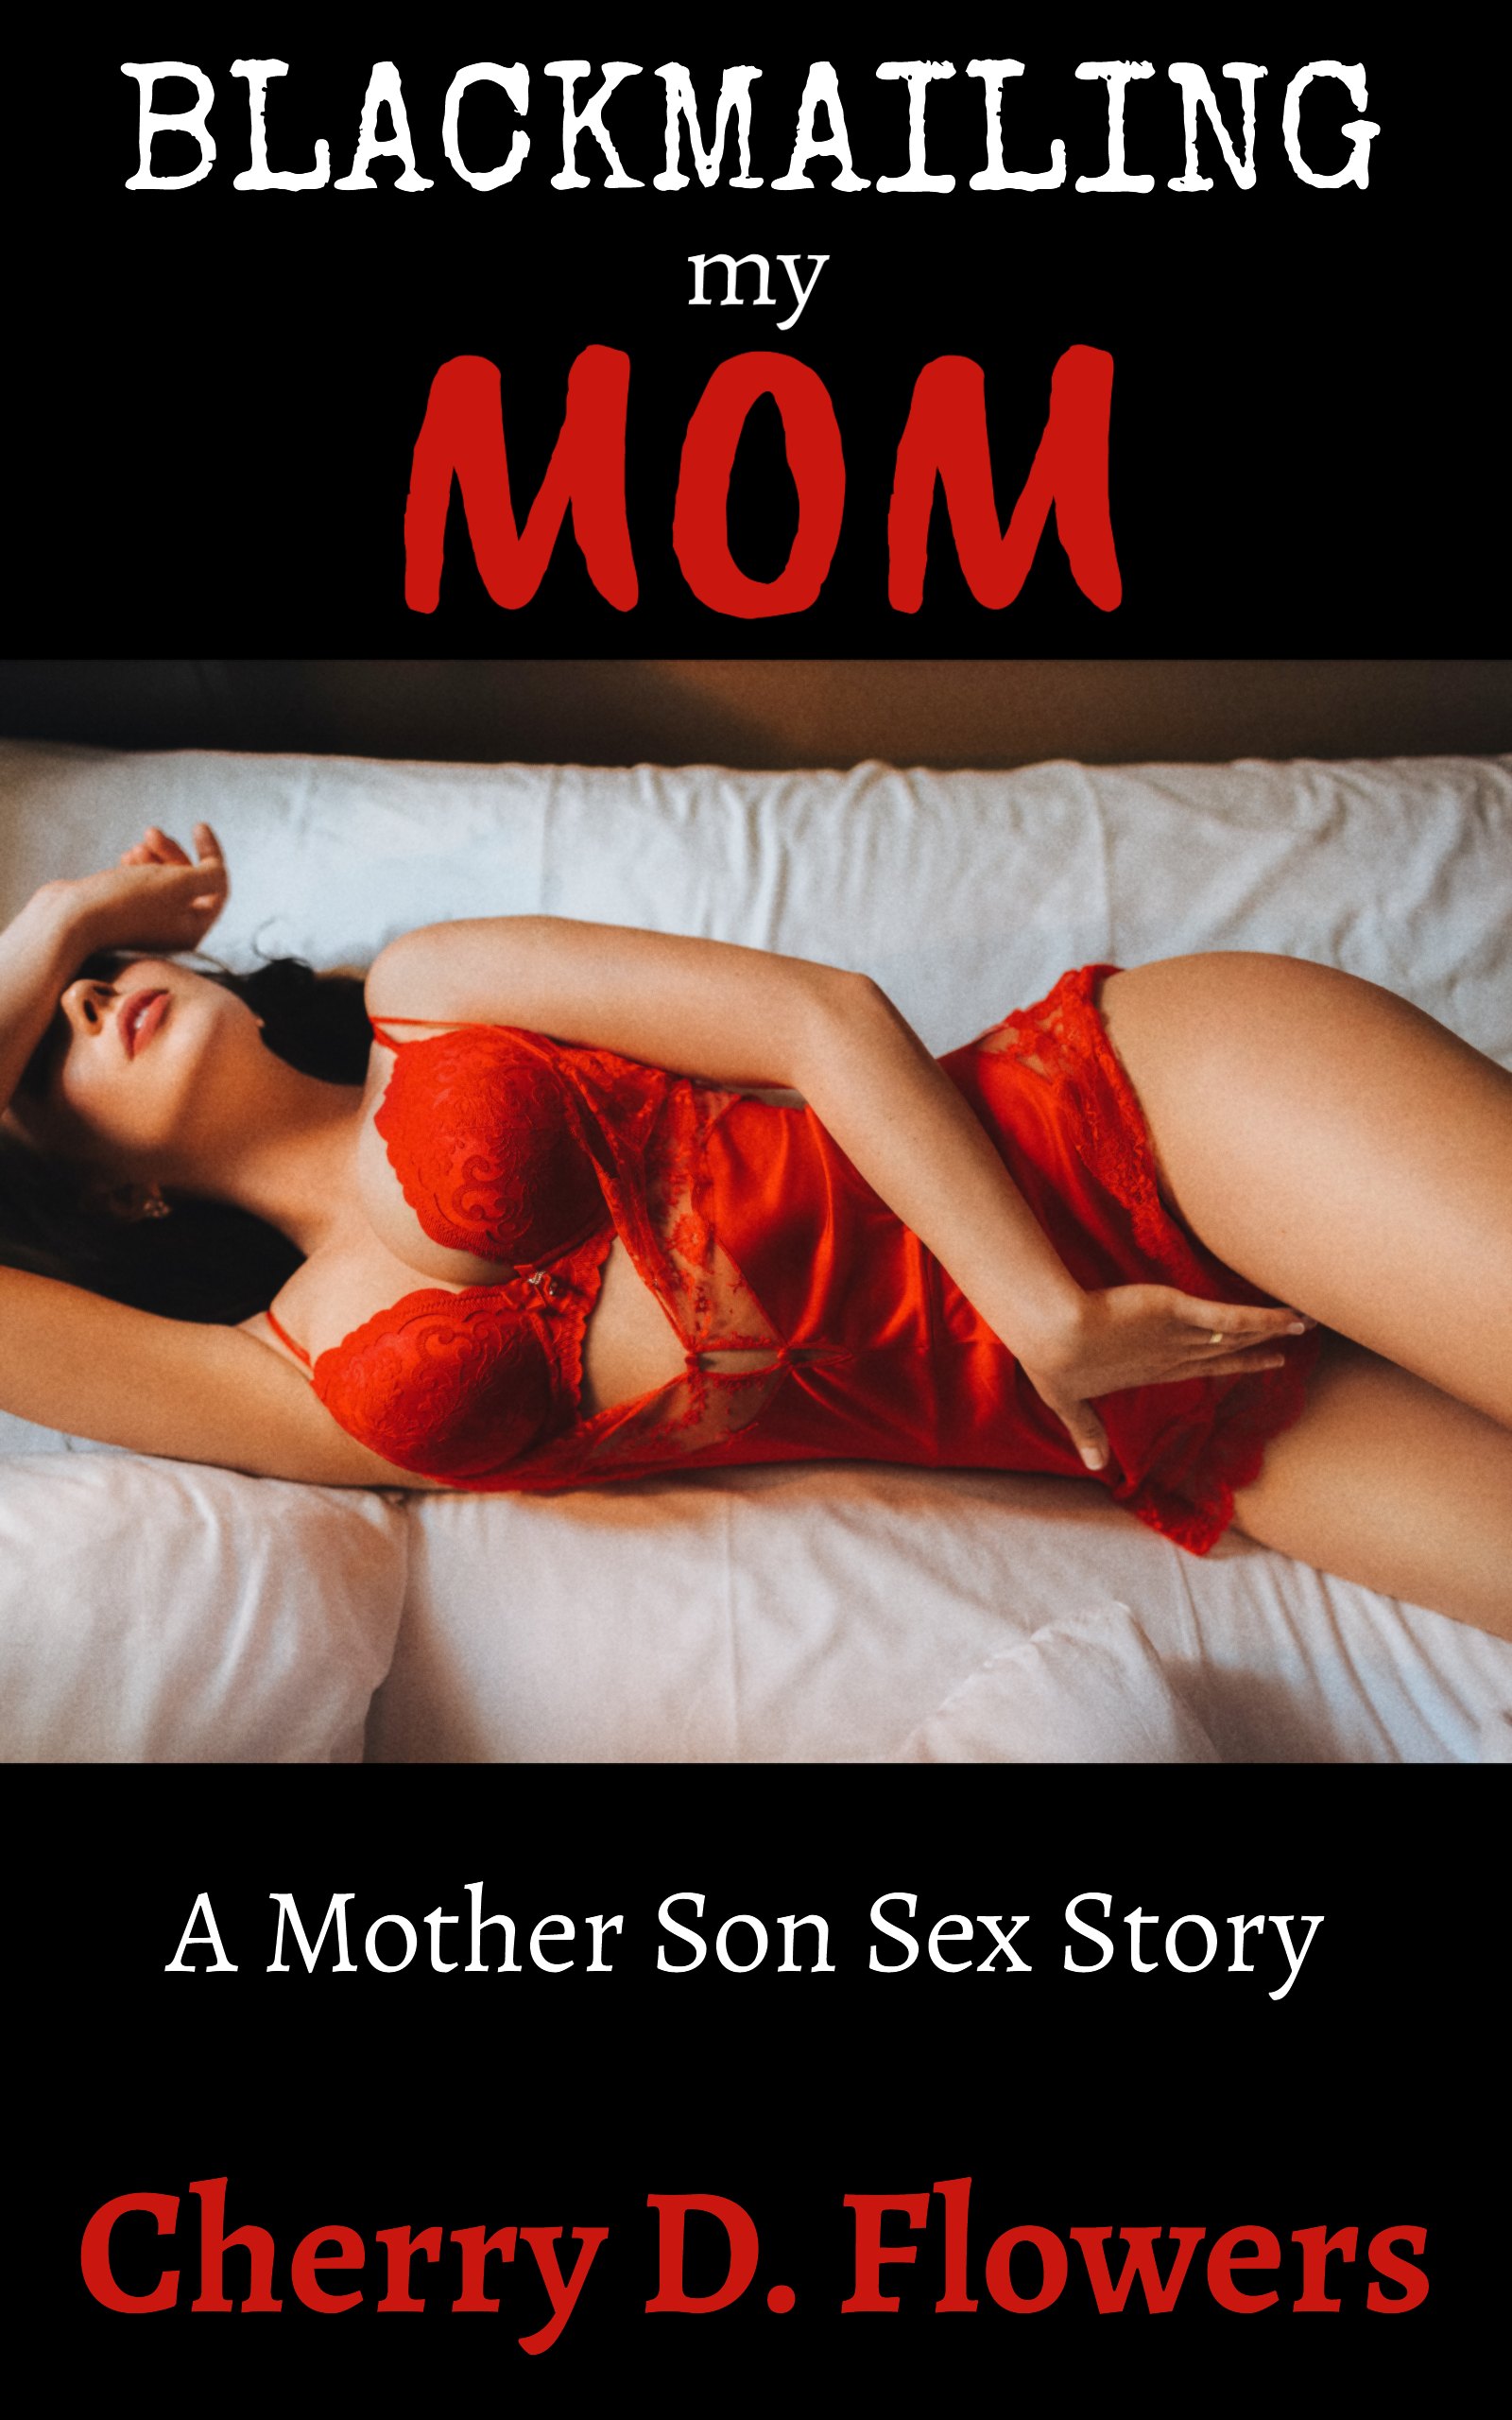 Son sex story mom 